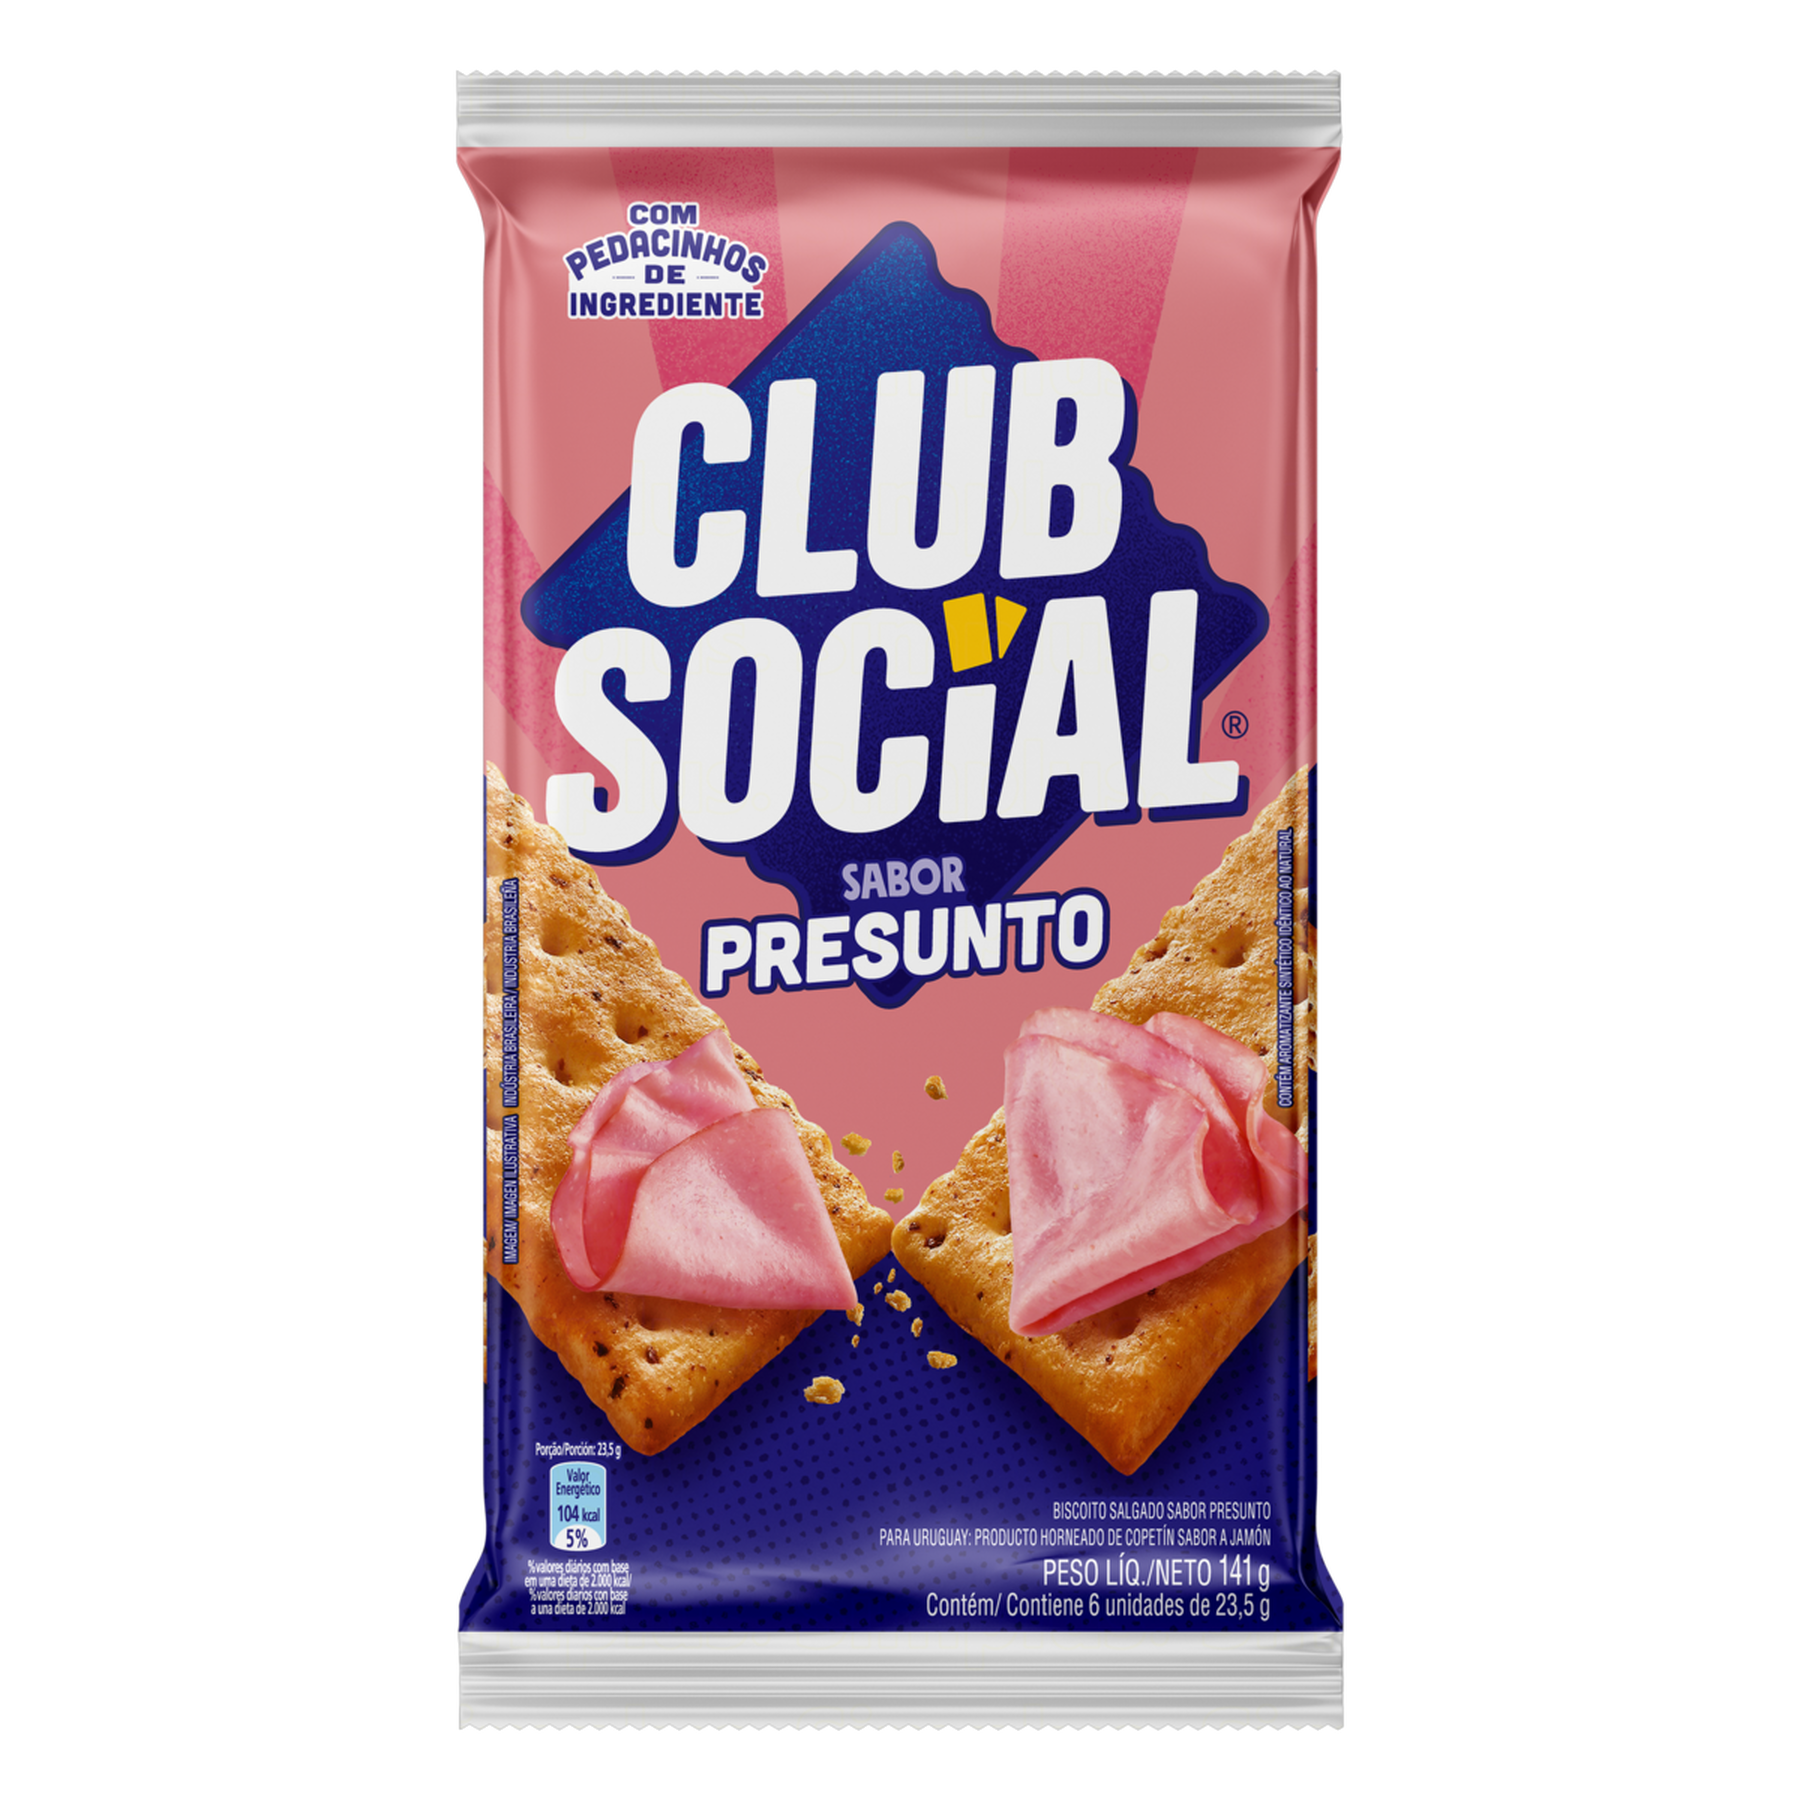 Pack Biscoito Presunto Club Social Pacote 141g 6 Unidades